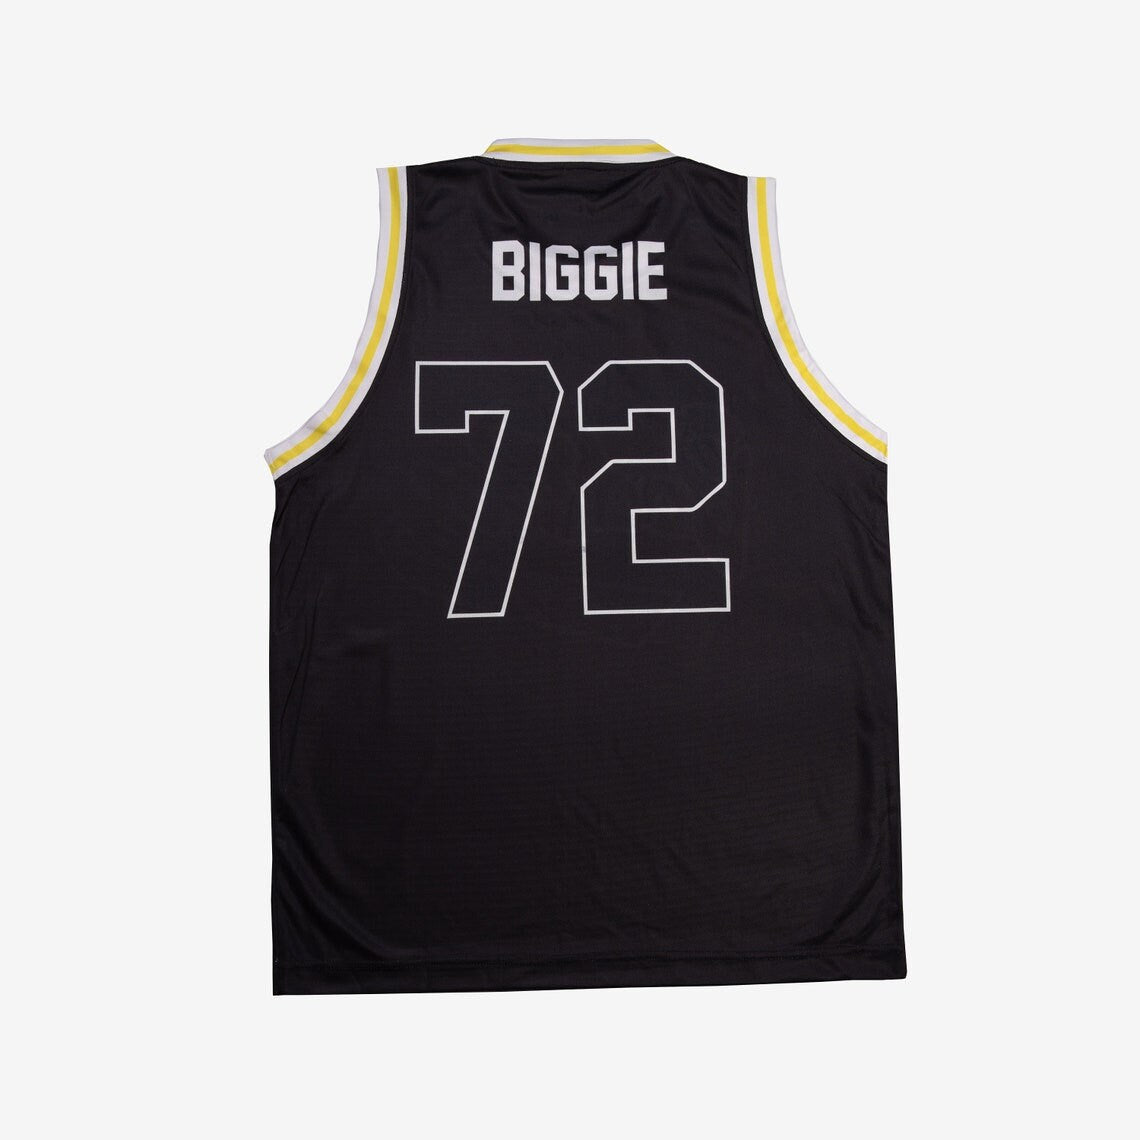 The Notorious B.I.G Biggie Smalls Hip Hop Basketball Jersey Retro